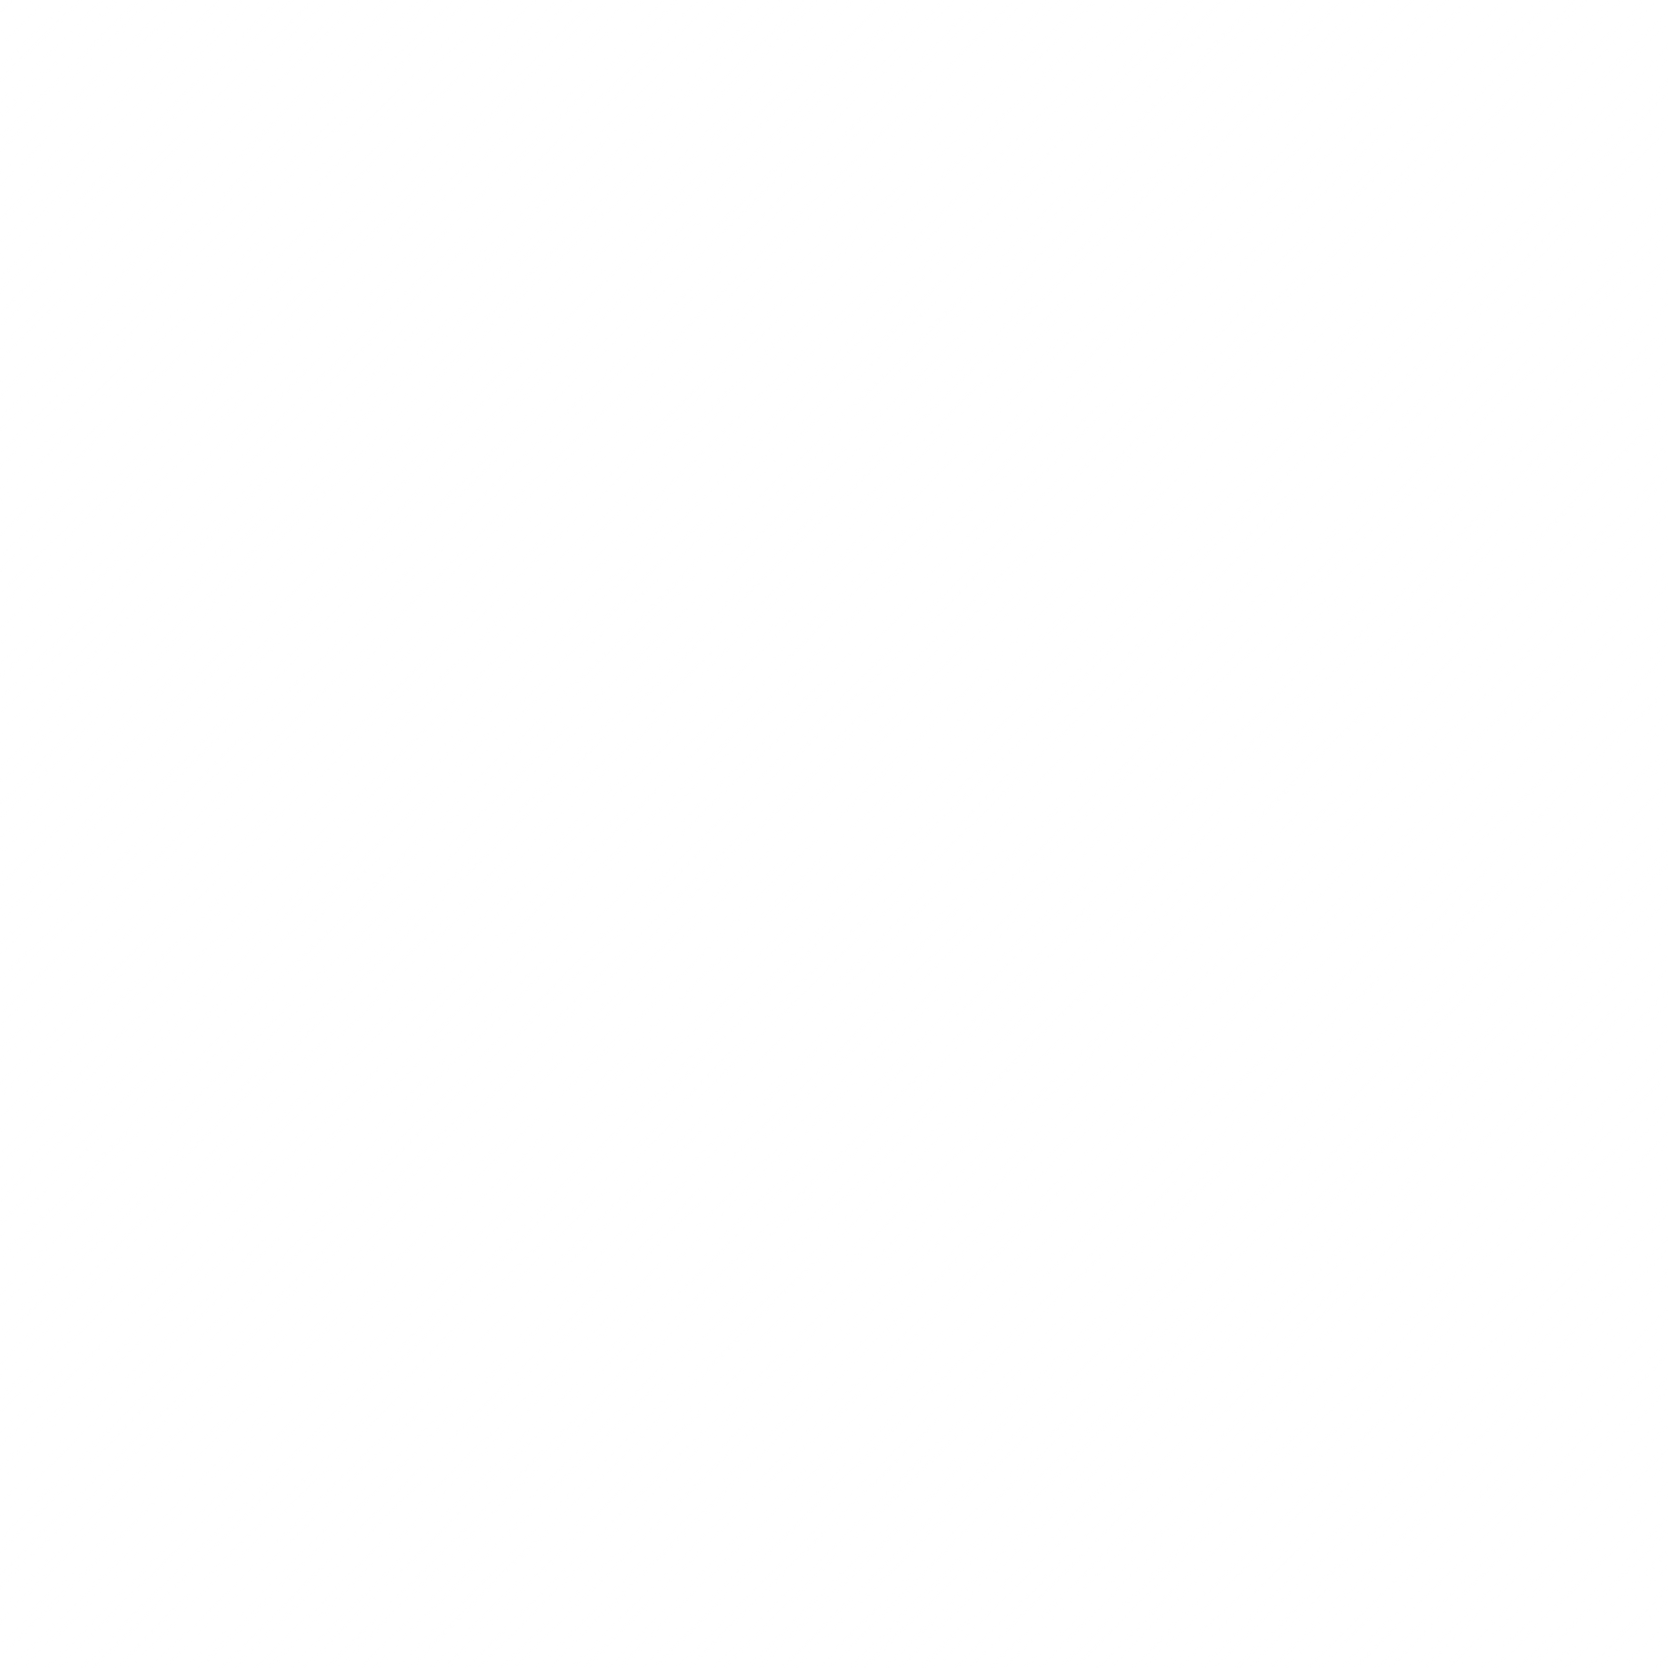 Diagonal Stripes Left